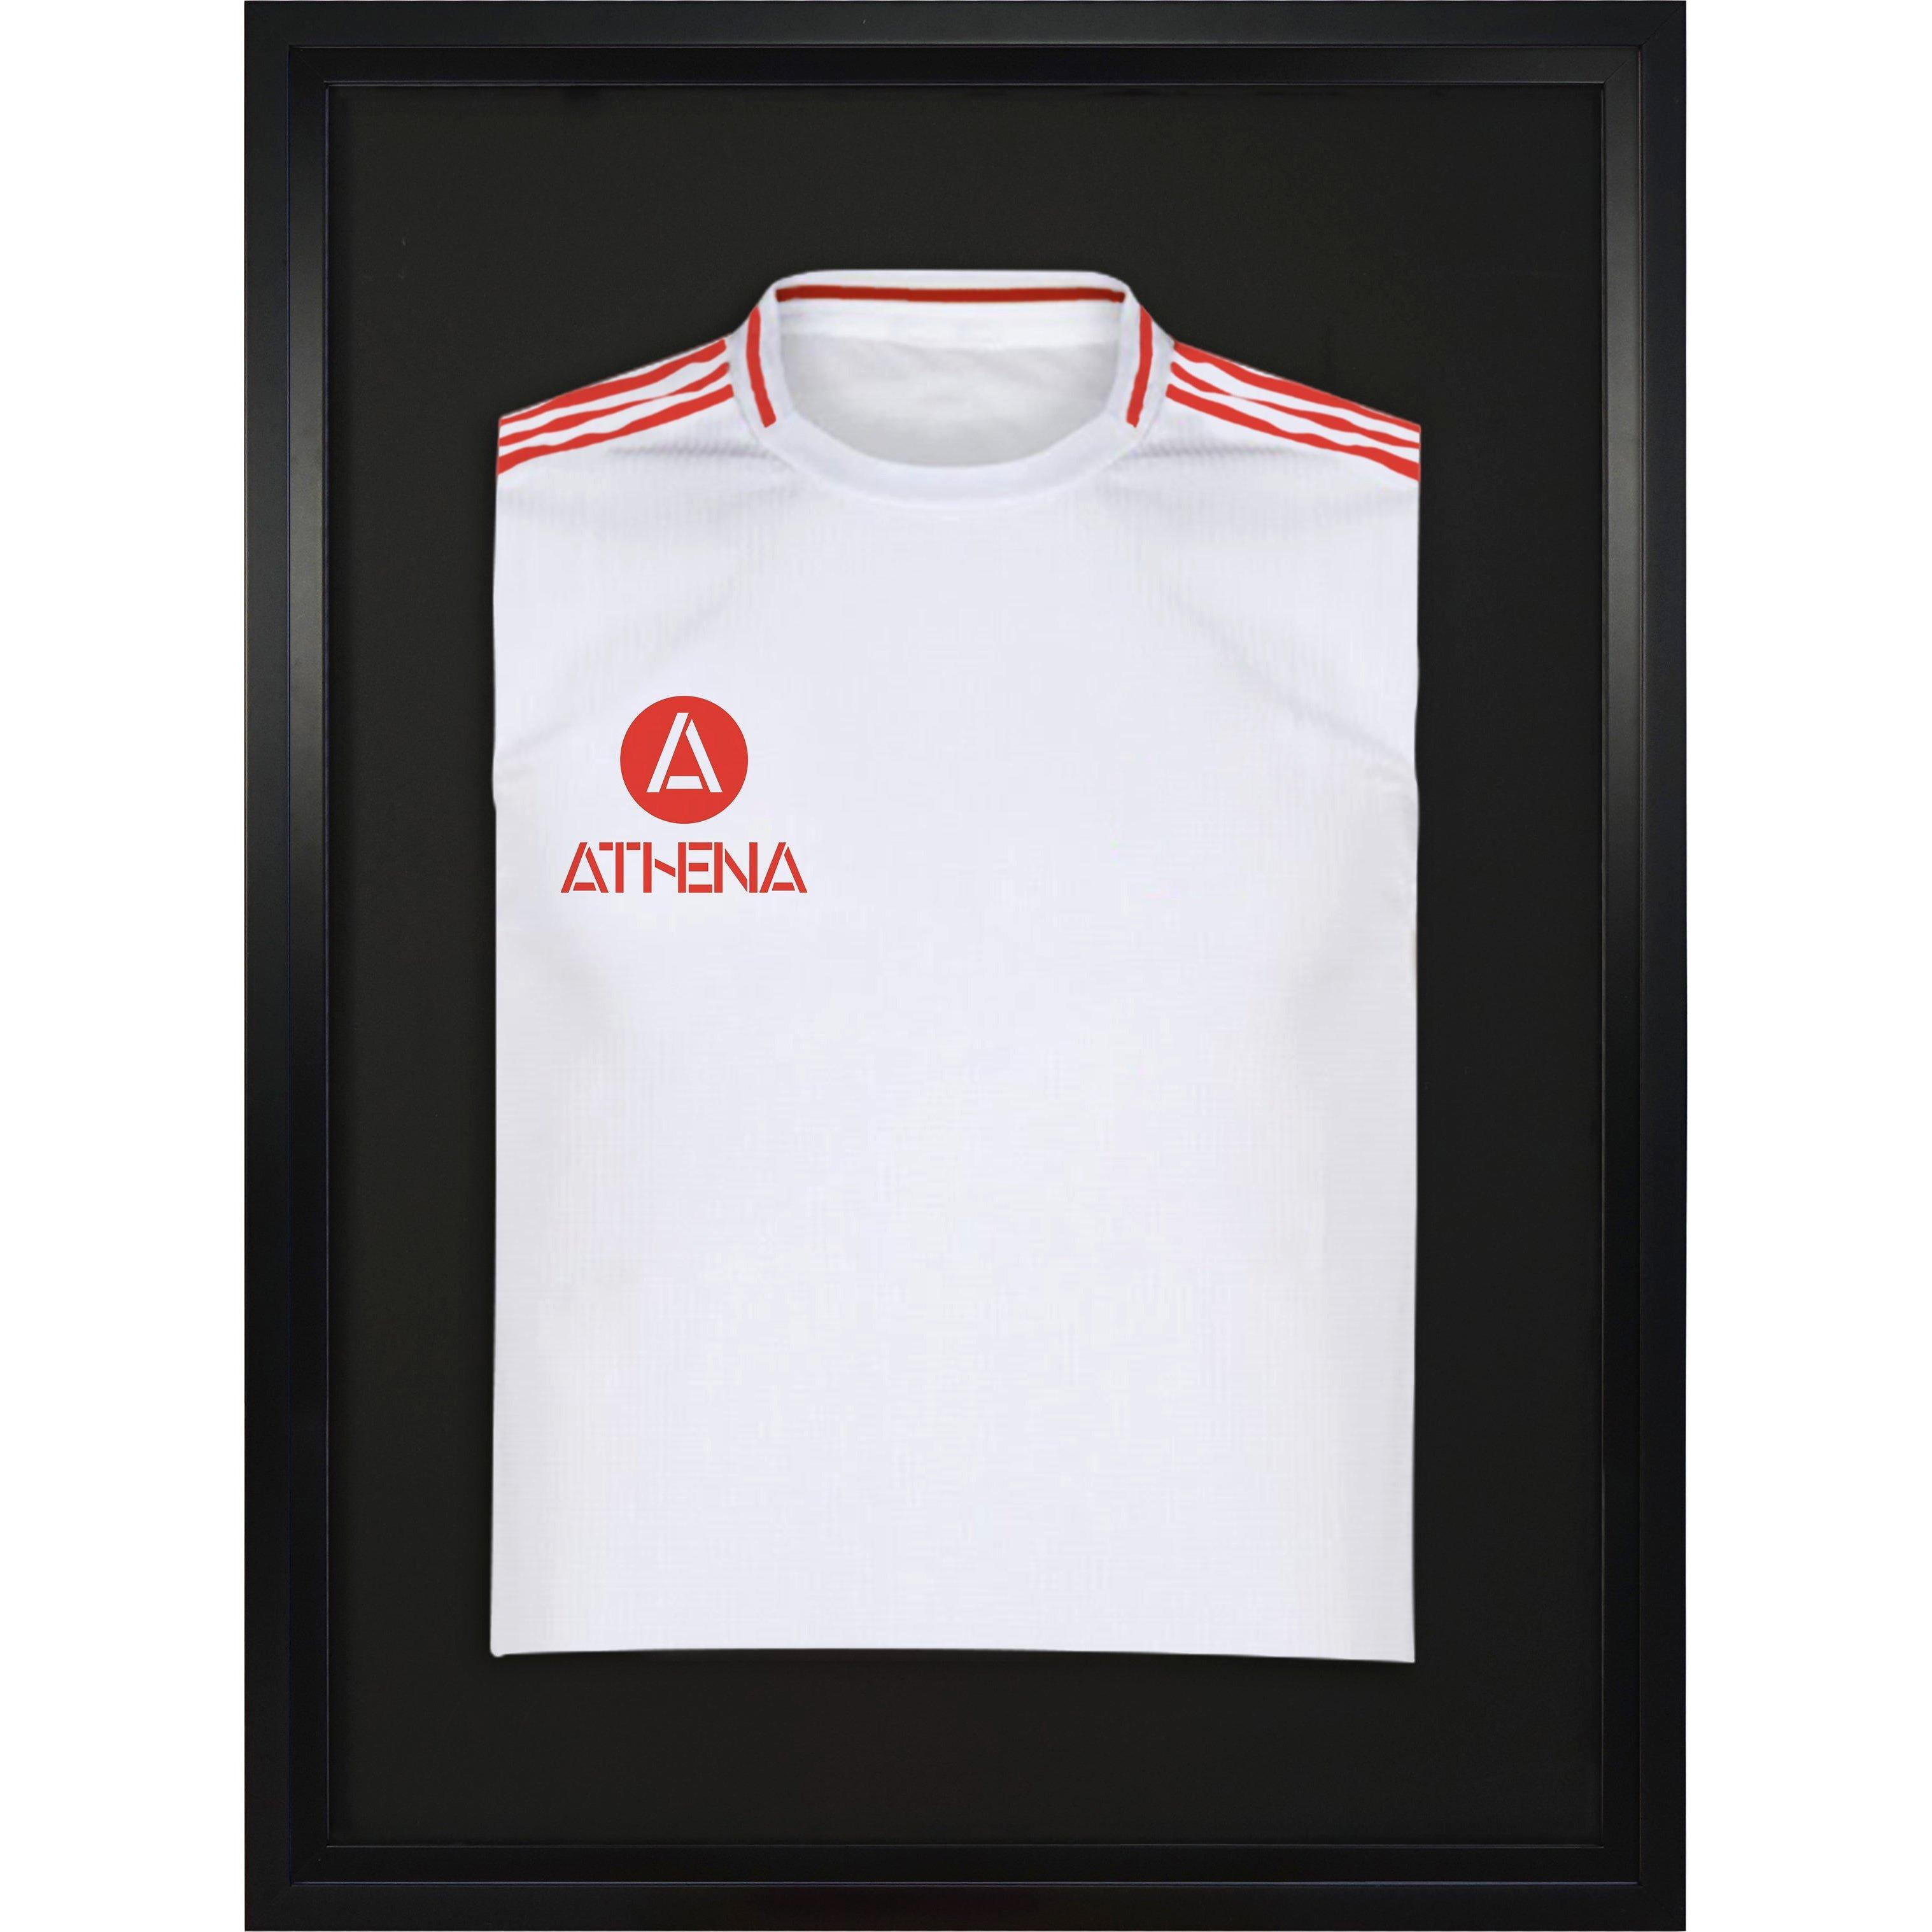 Athena Standard Mounted Sports Shirt Display Frame with Black Frame and Black Inner Frame 60 x 80cm